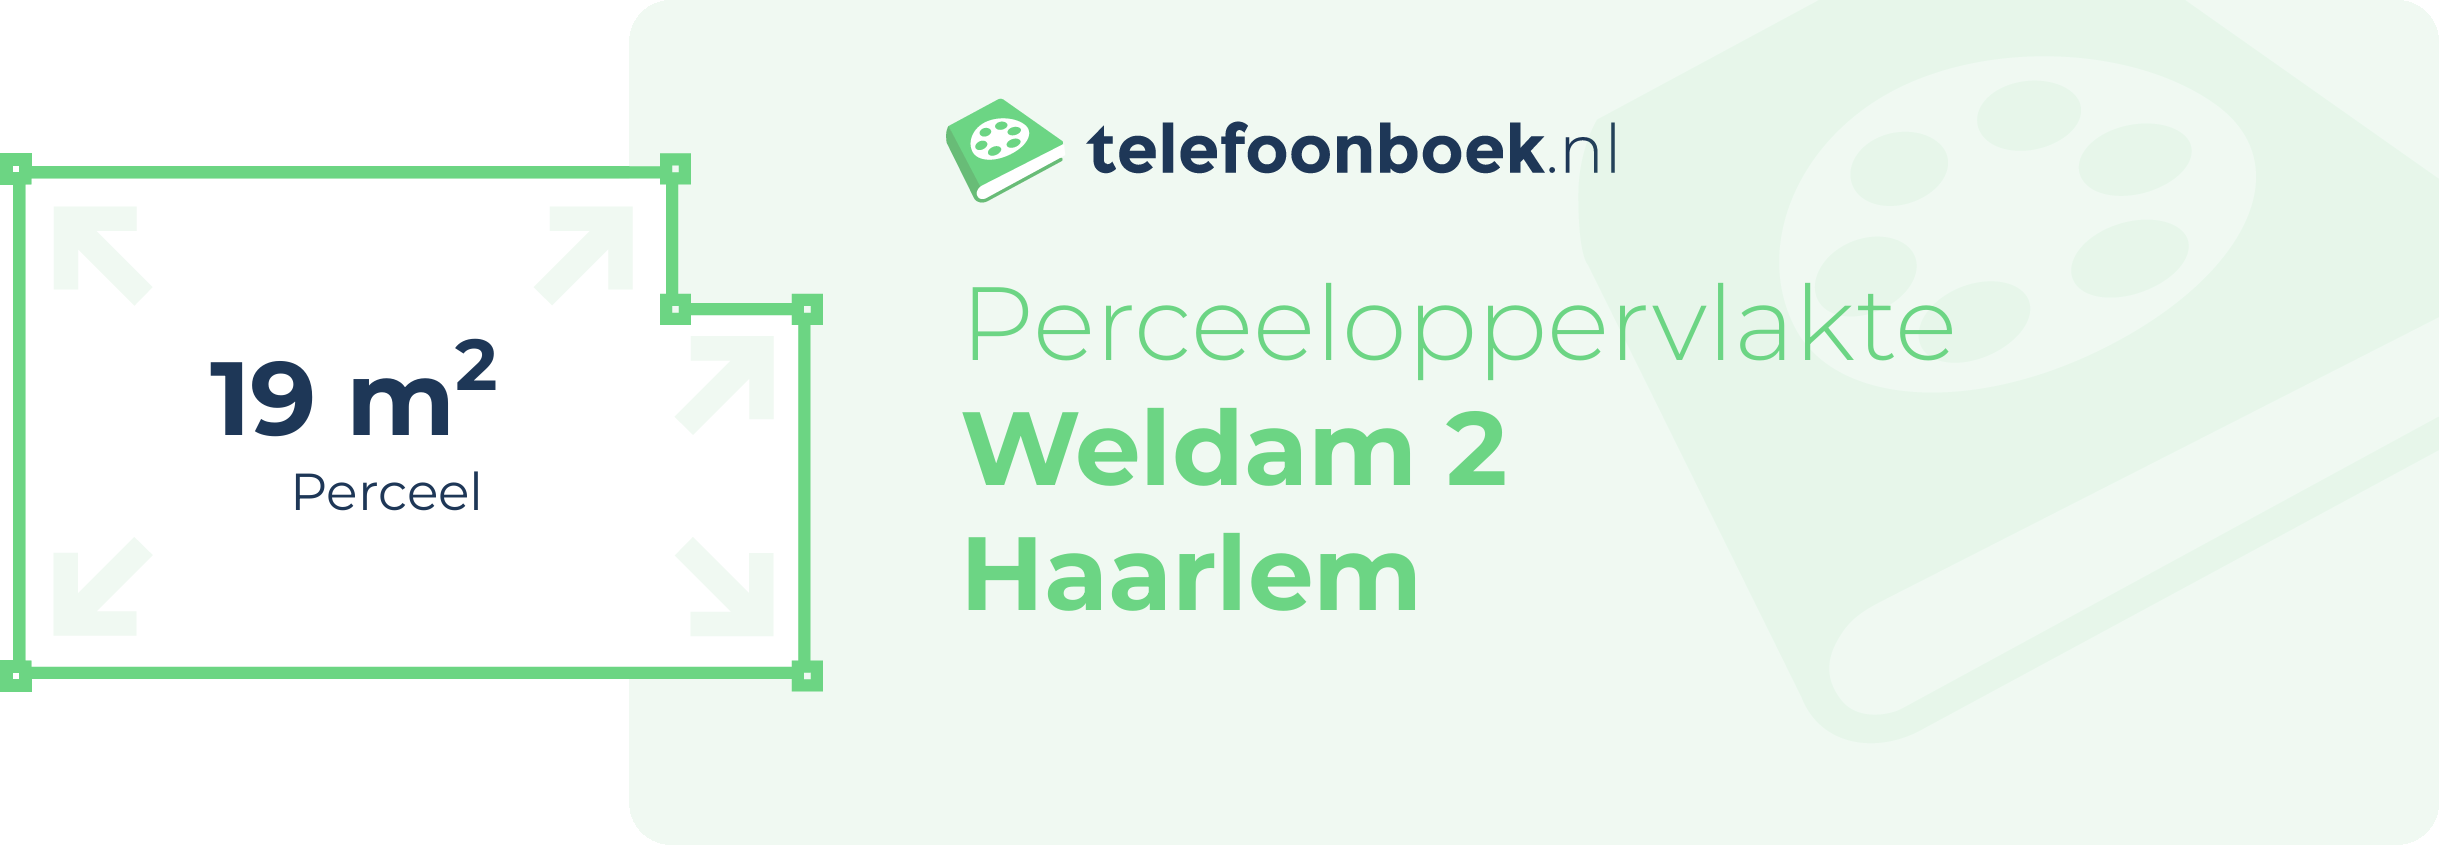 Perceeloppervlakte Weldam 2 Haarlem